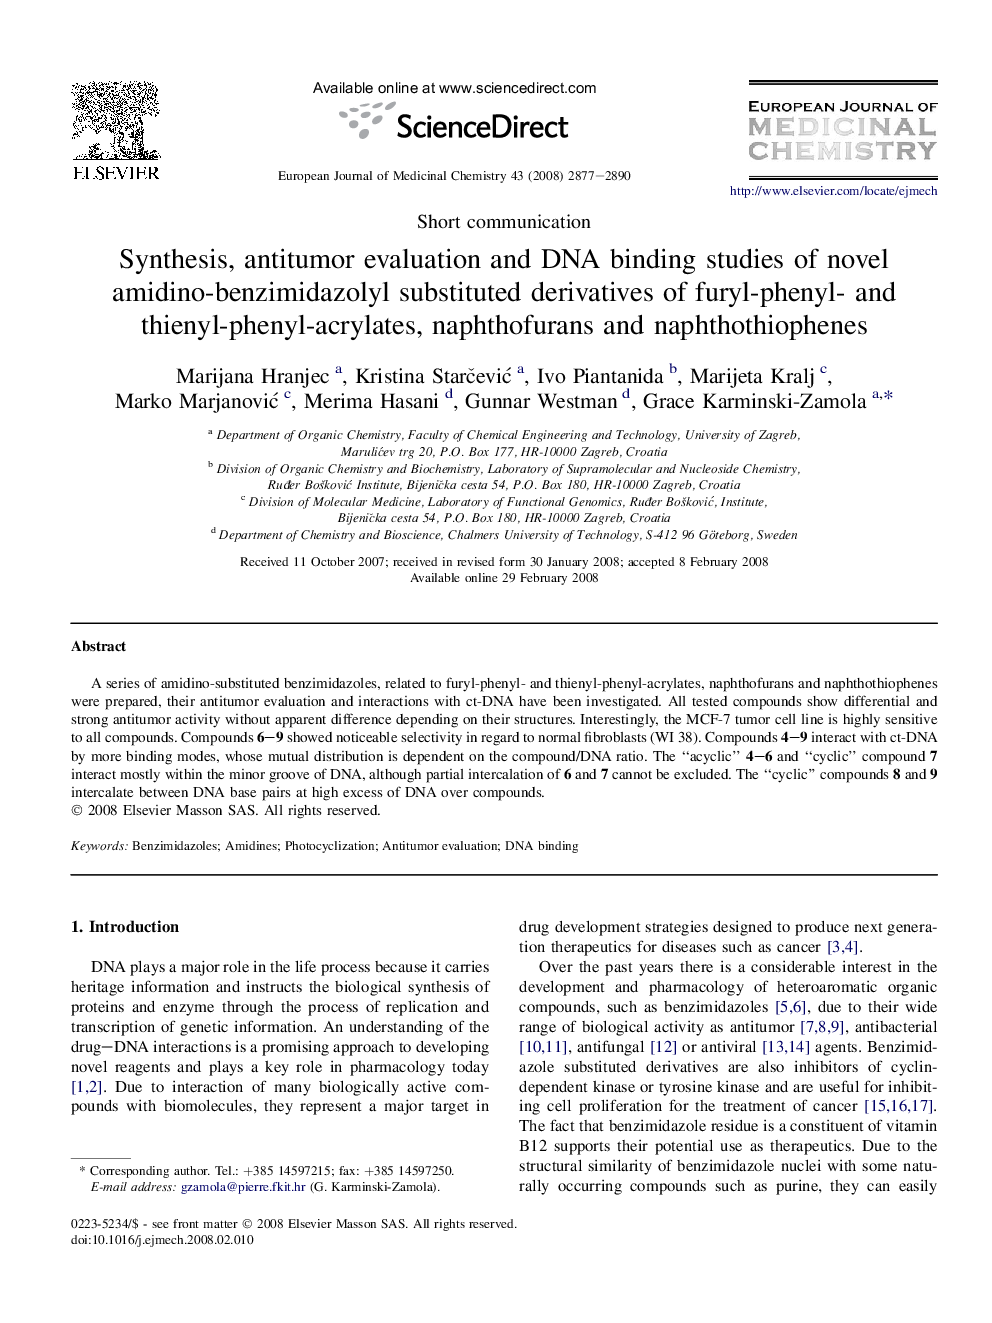 Synthesis, antitumor evaluation and DNA binding studies of novel amidino-benzimidazolyl substituted derivatives of furyl-phenyl- and thienyl-phenyl-acrylates, naphthofurans and naphthothiophenes